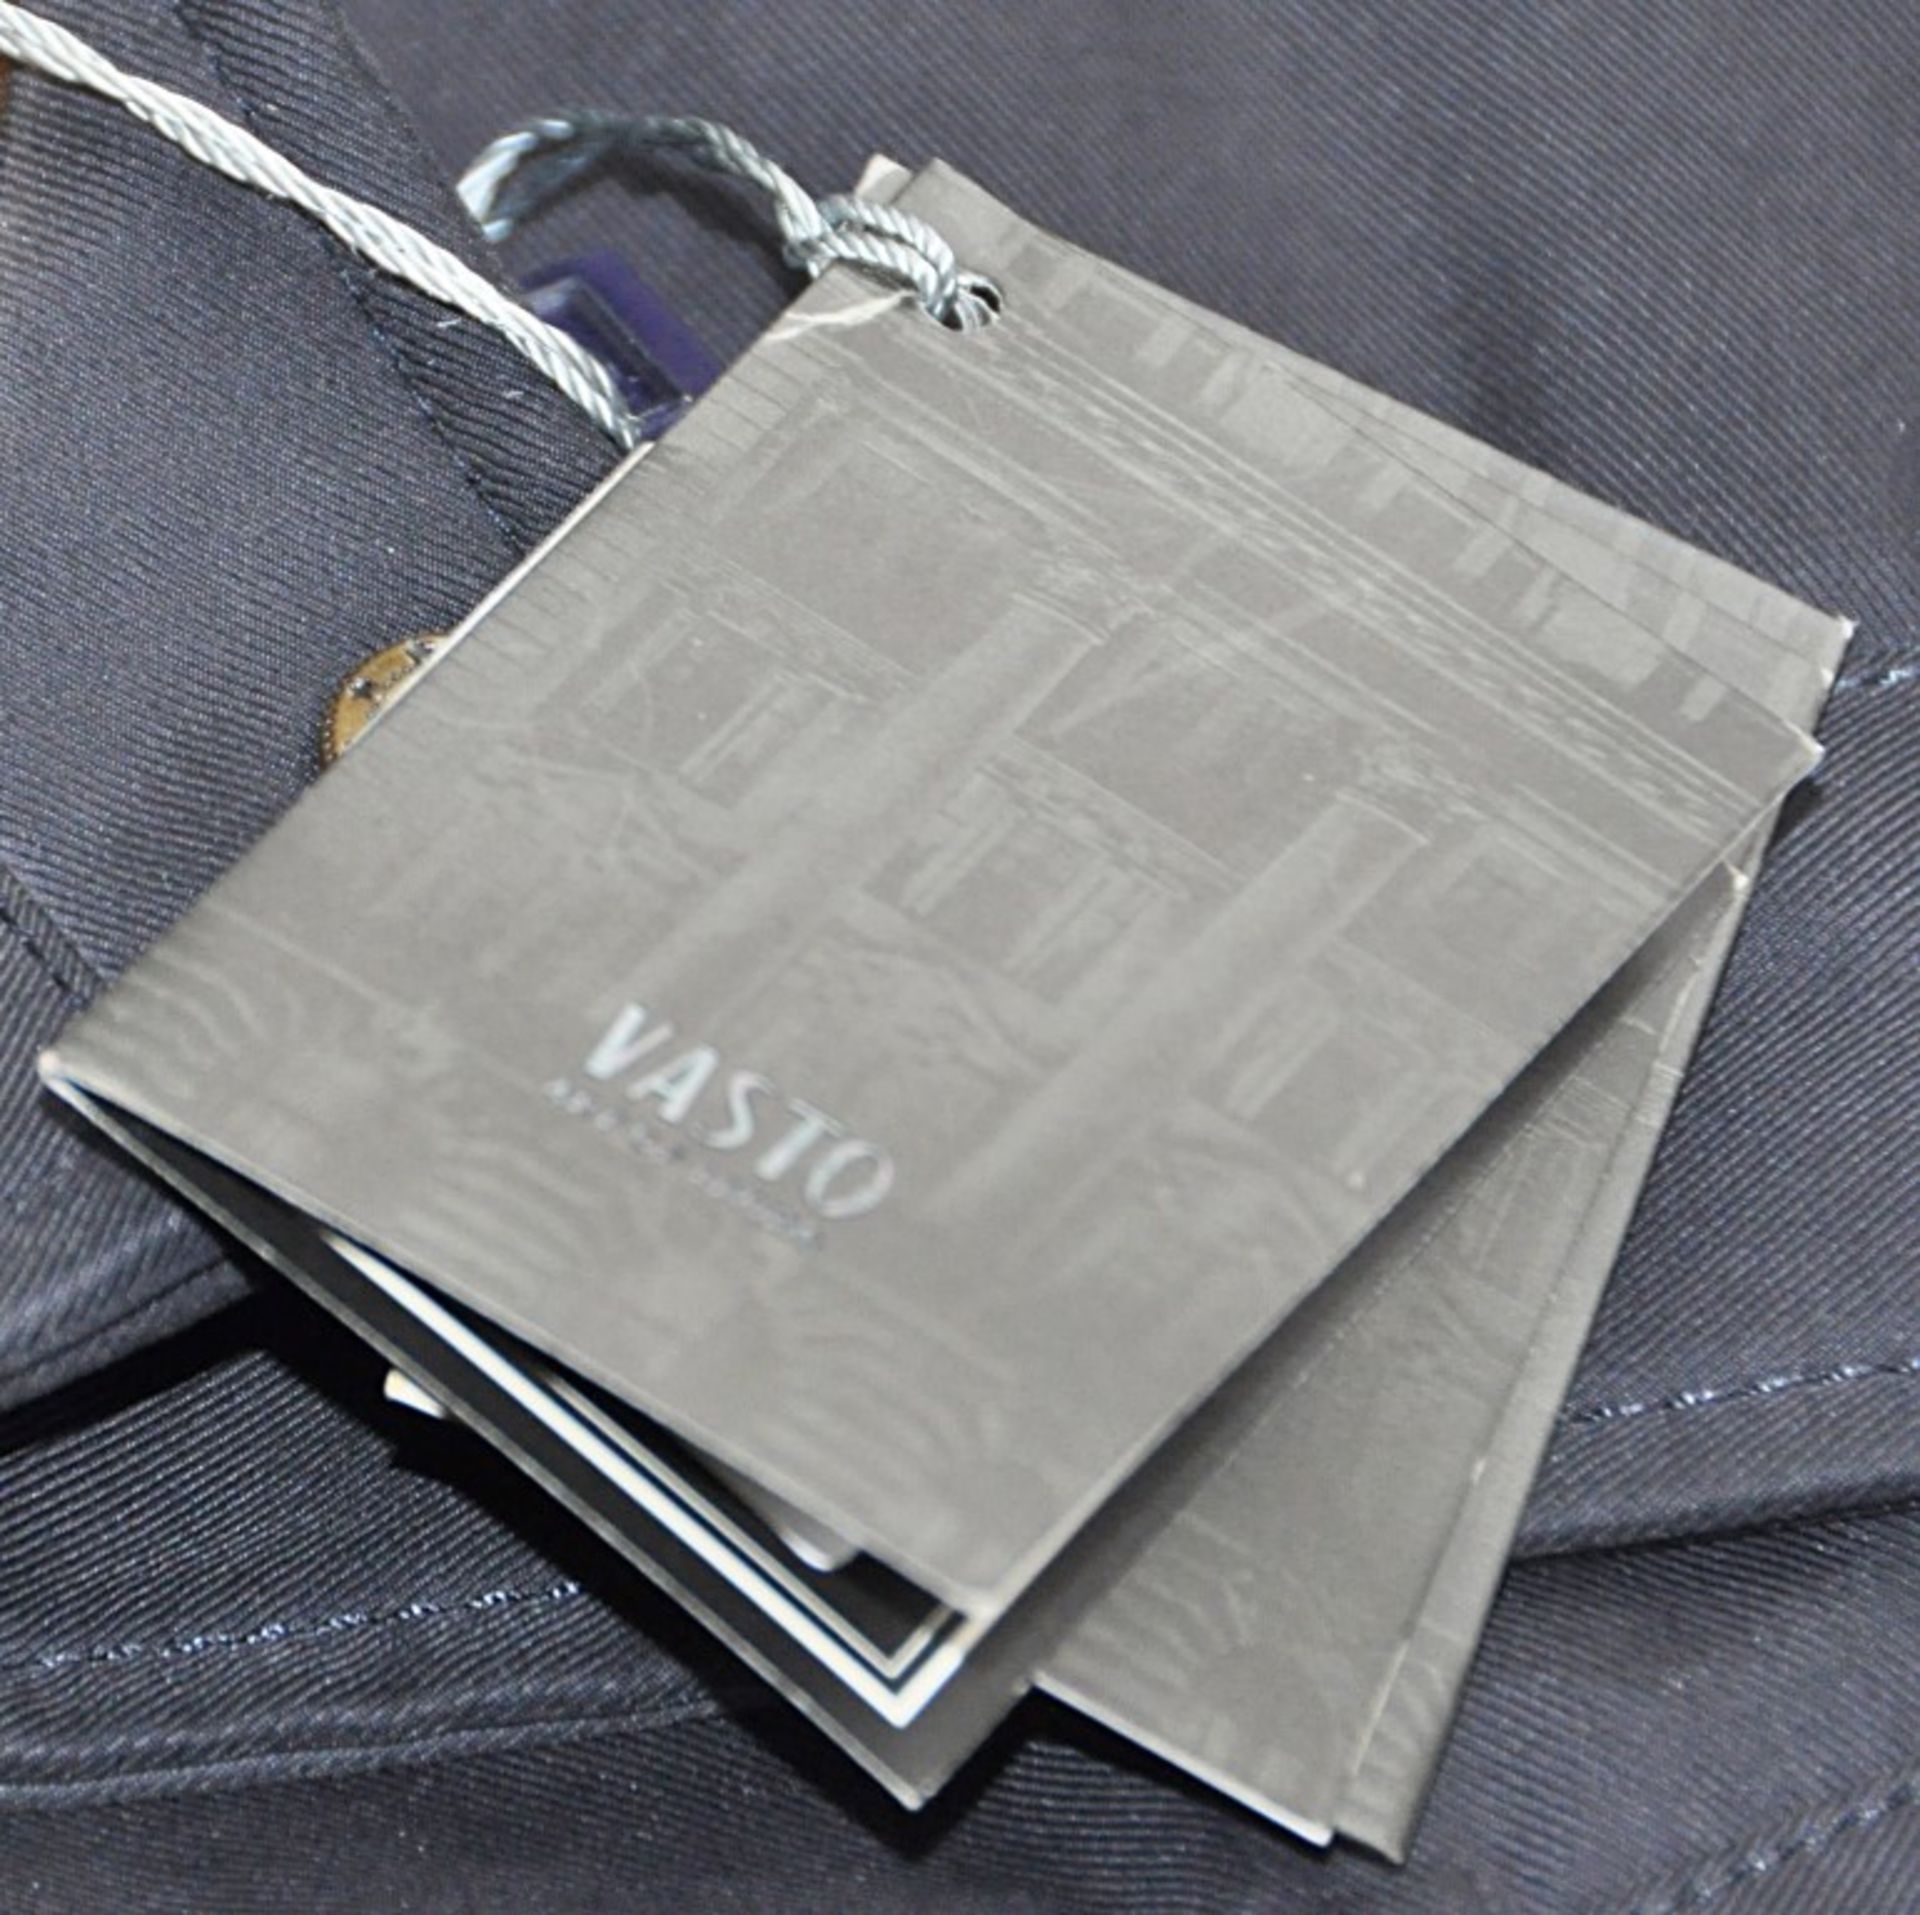 1 x Men's Long Sleeve Casual Jacket By International Luxury Brand "Vasto" (BAJ72241) – Size: Small – - Image 6 of 6